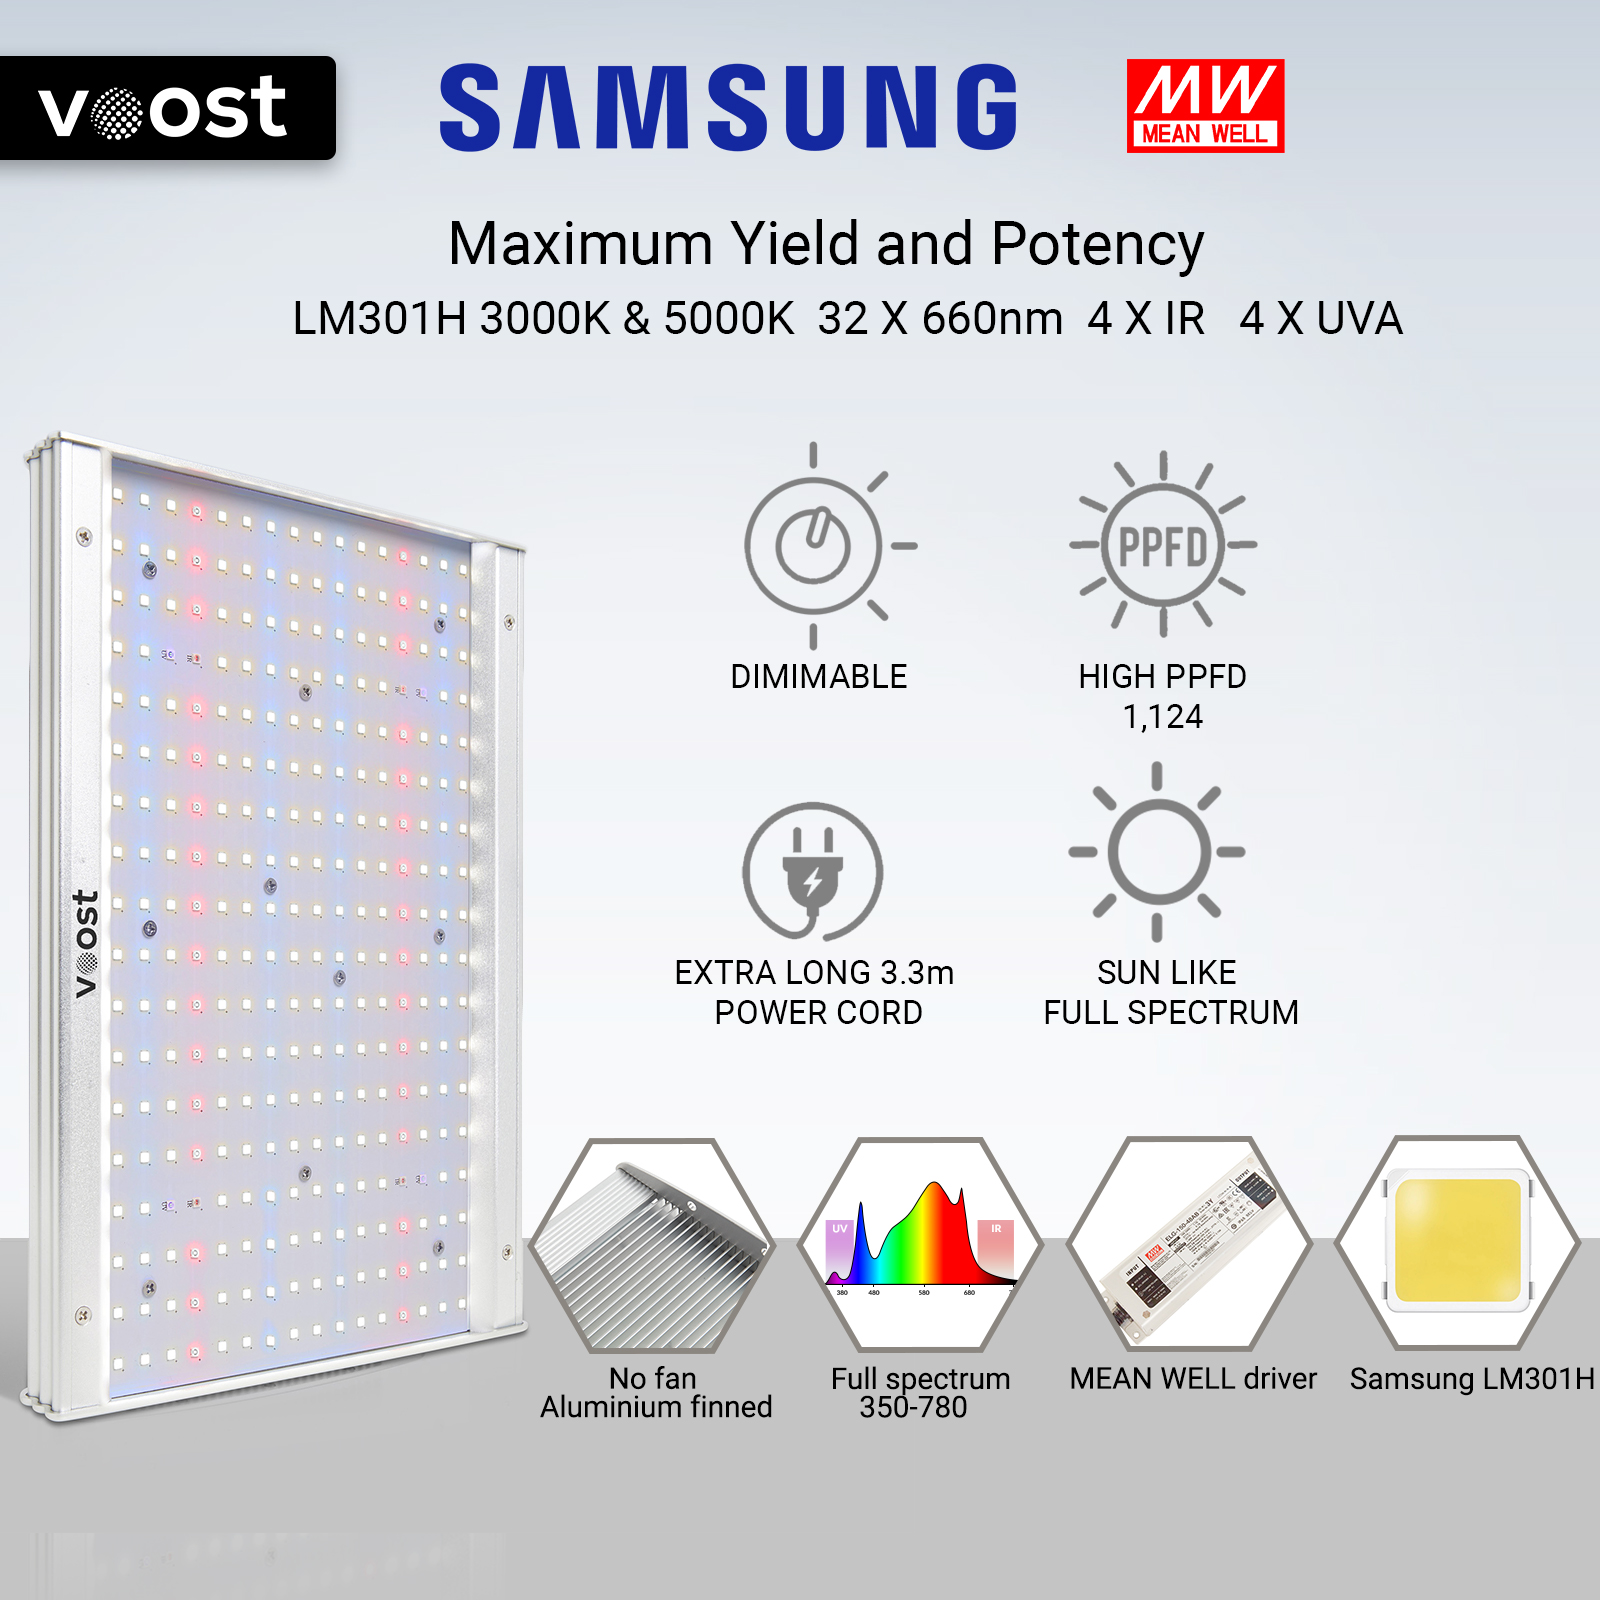 Voost VST120 LED Grow Light